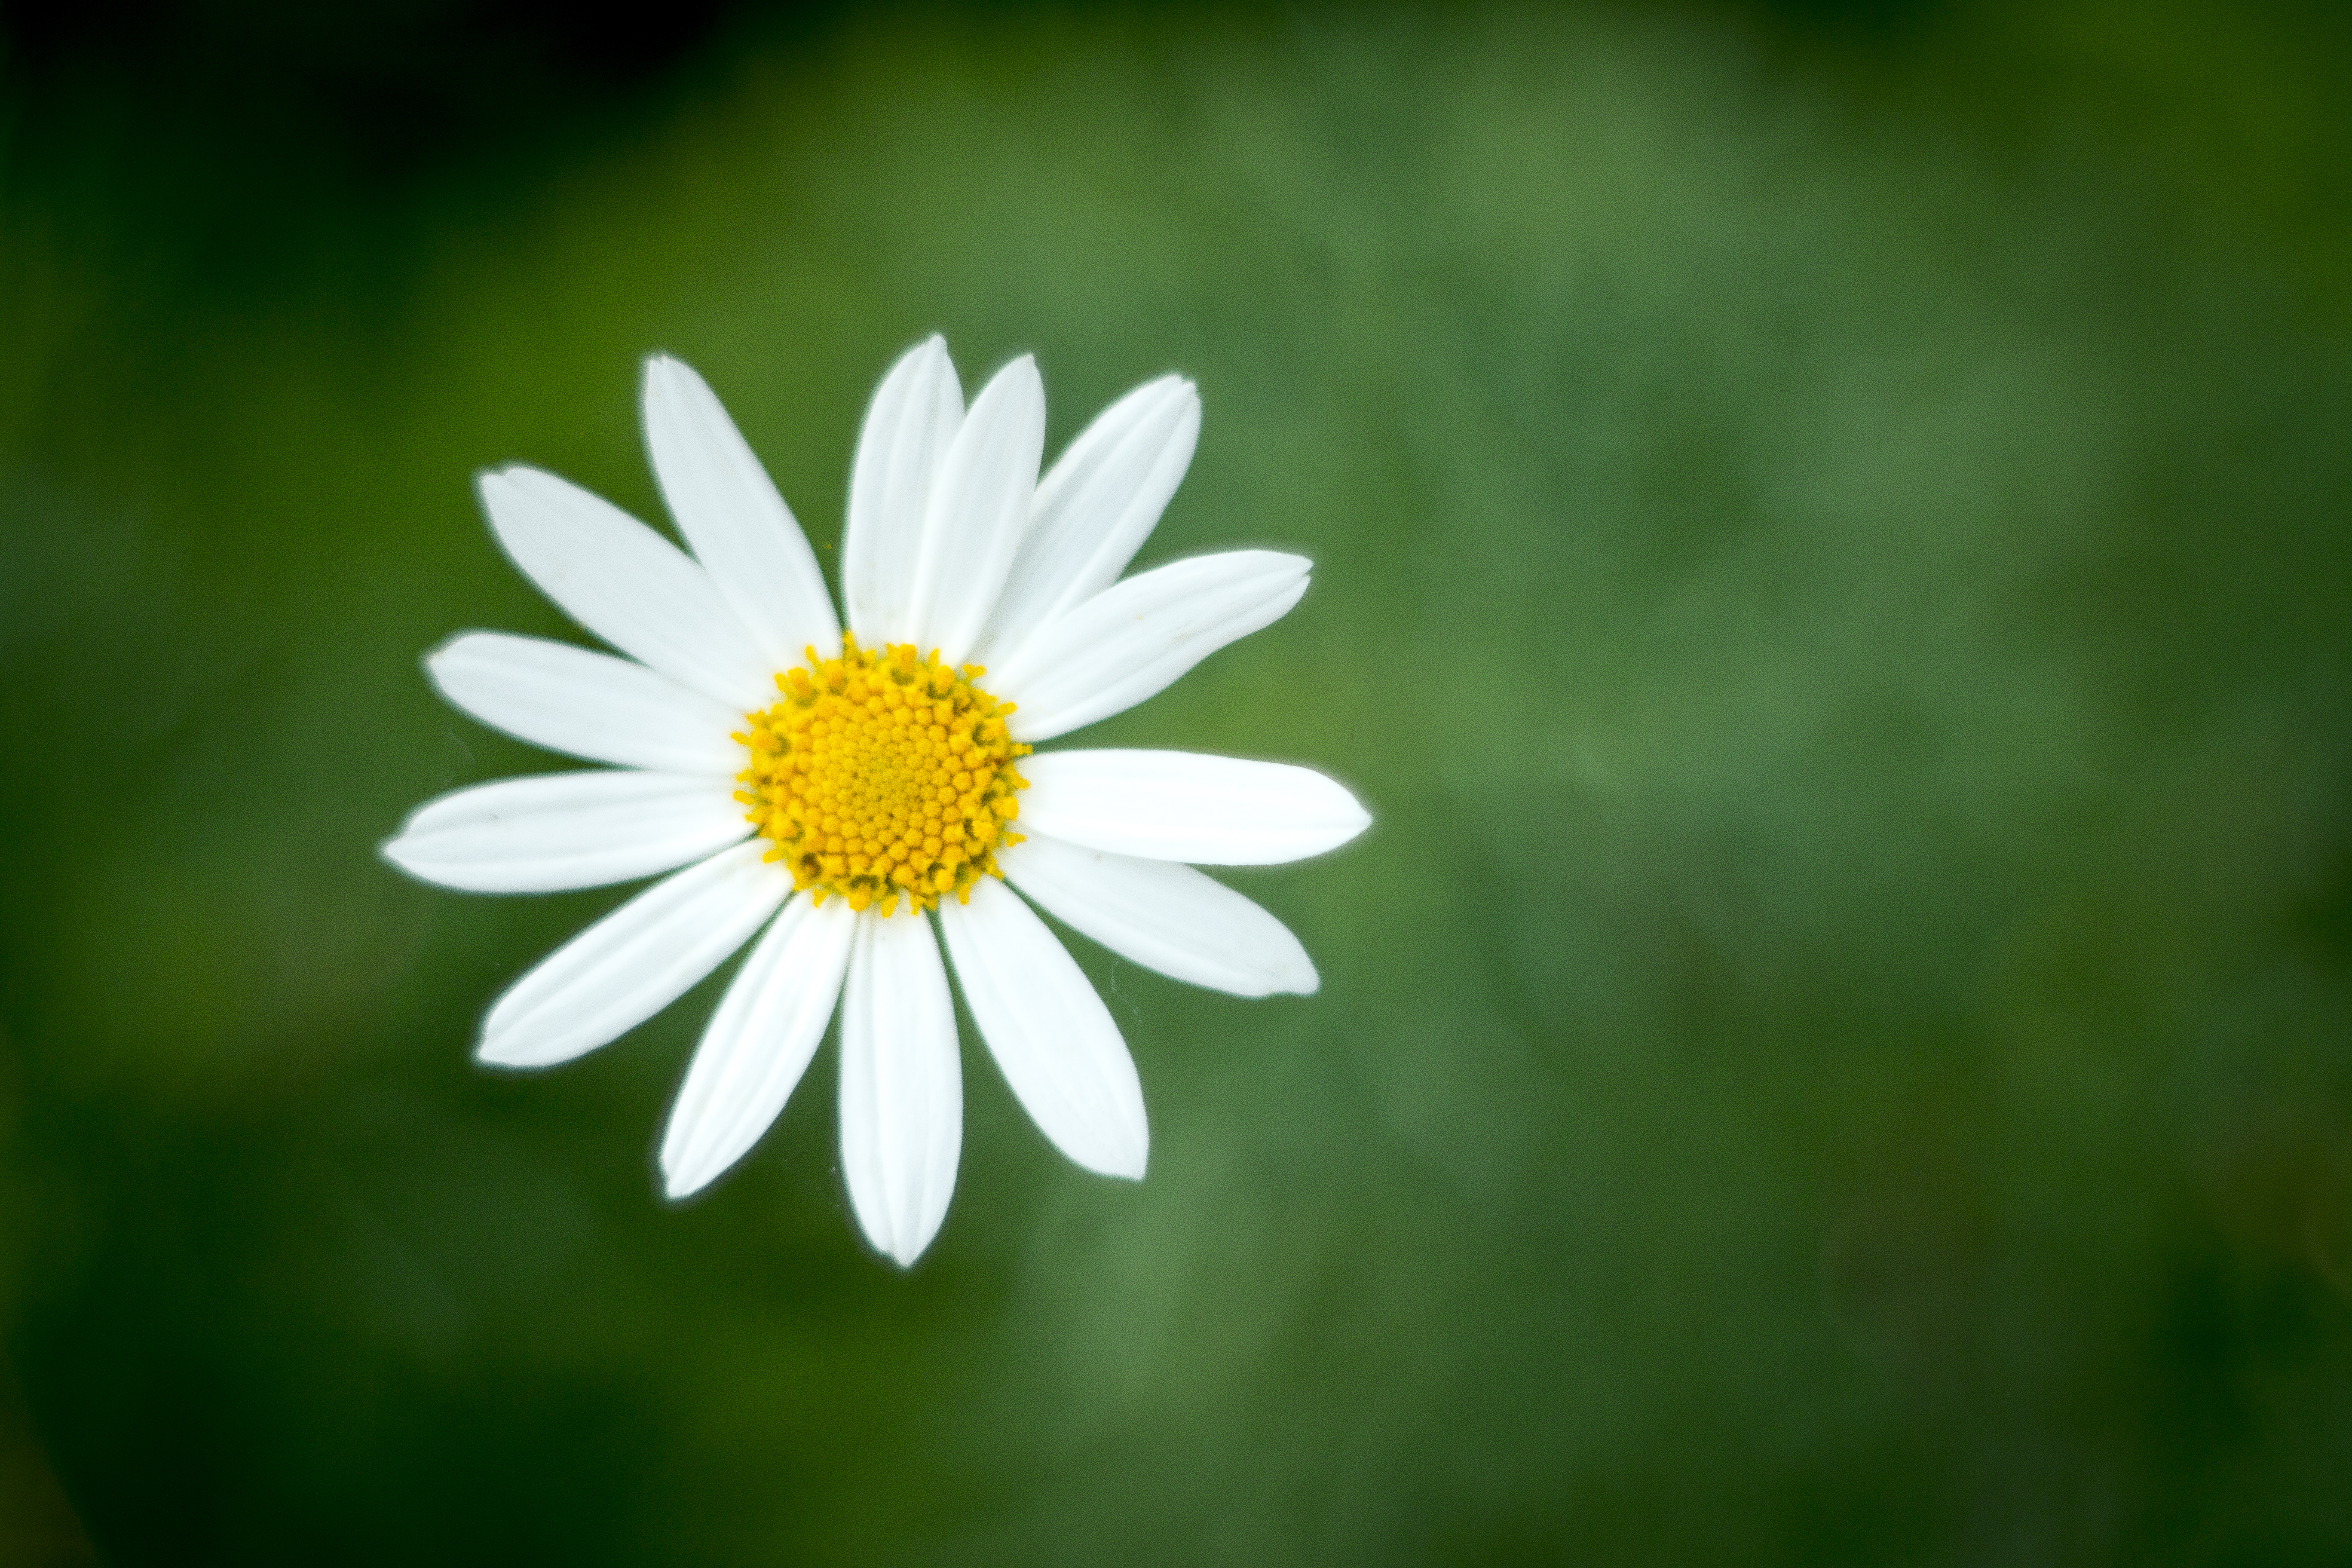 1000+ Beautiful White Daisy Photos · Pexels · Free Stock Photos